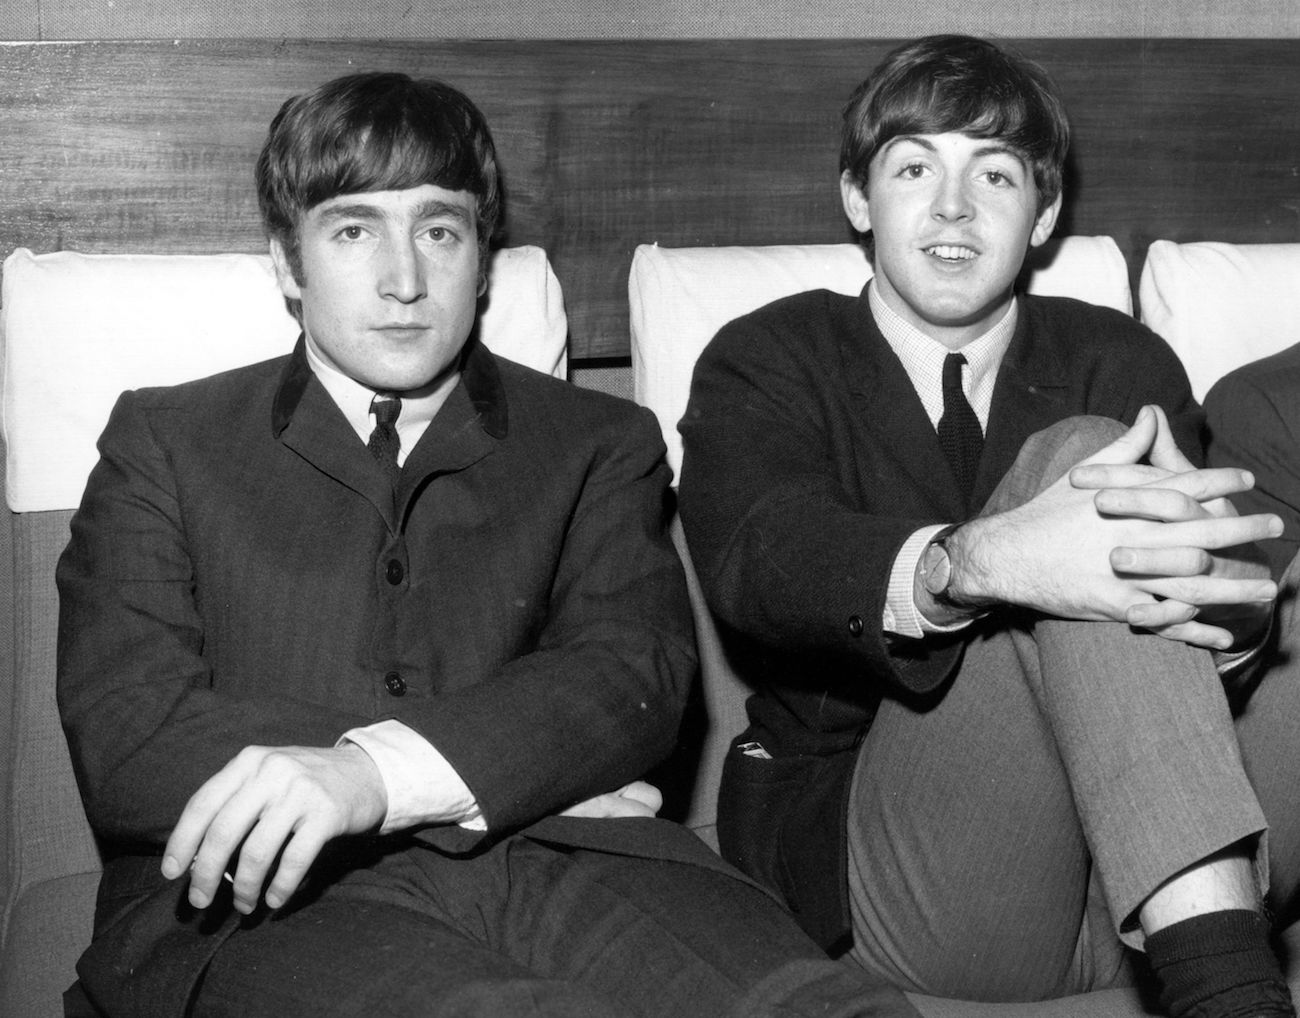 Paul McCartney and John Lennon in suits in 1964.